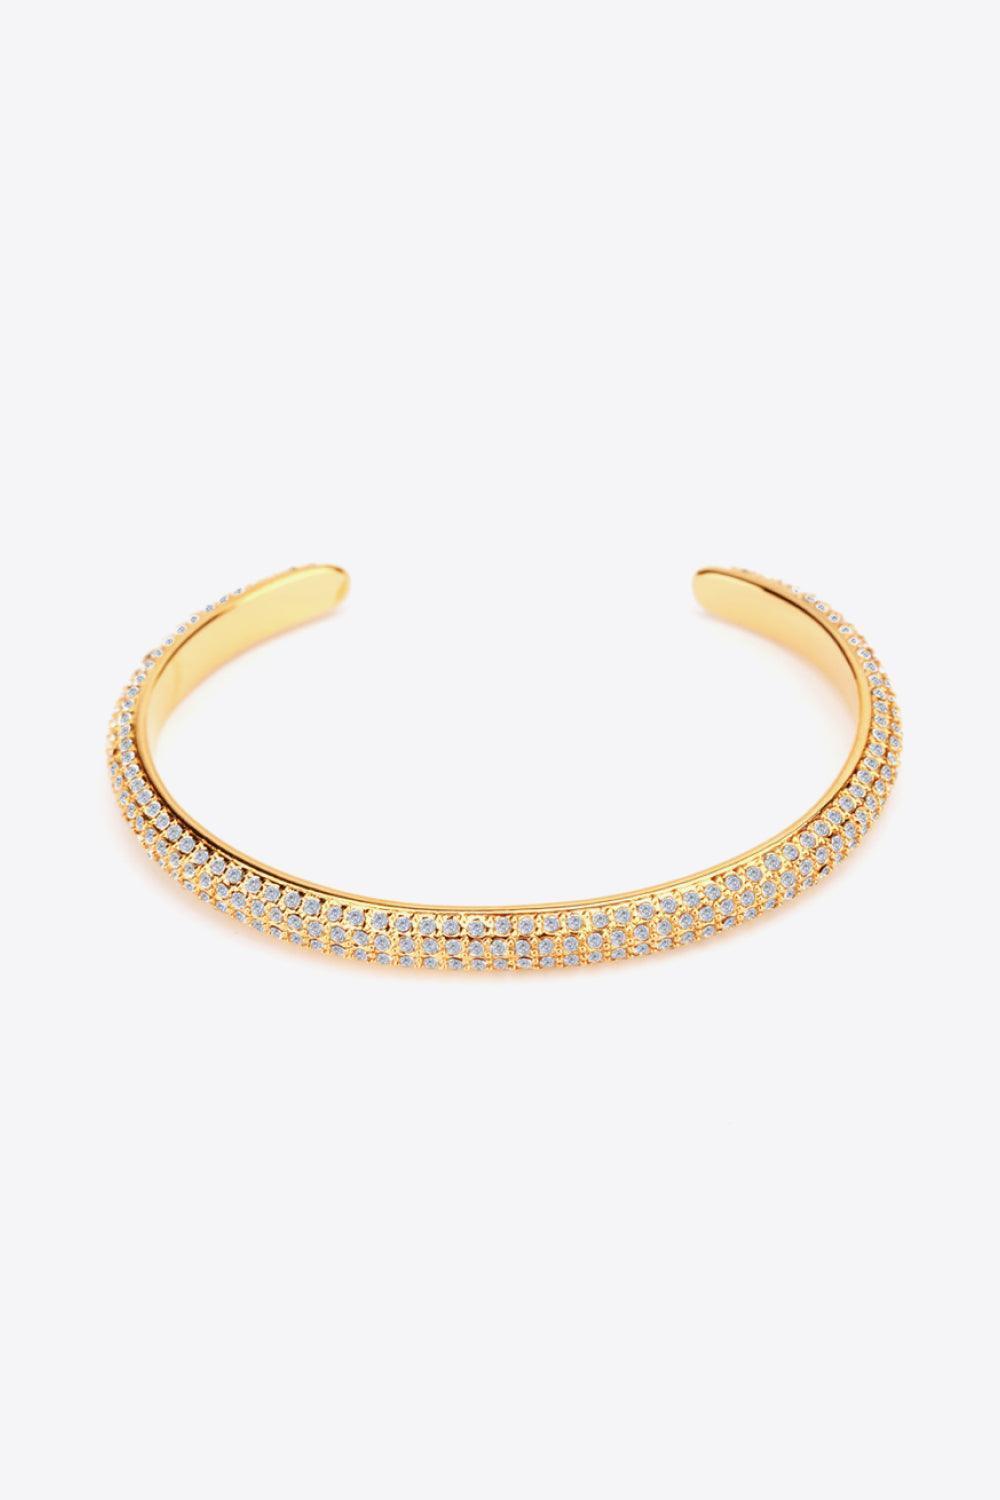 Blissful Rhinestone Detail Open Gold Plated Bracelet - MXSTUDIO.COM